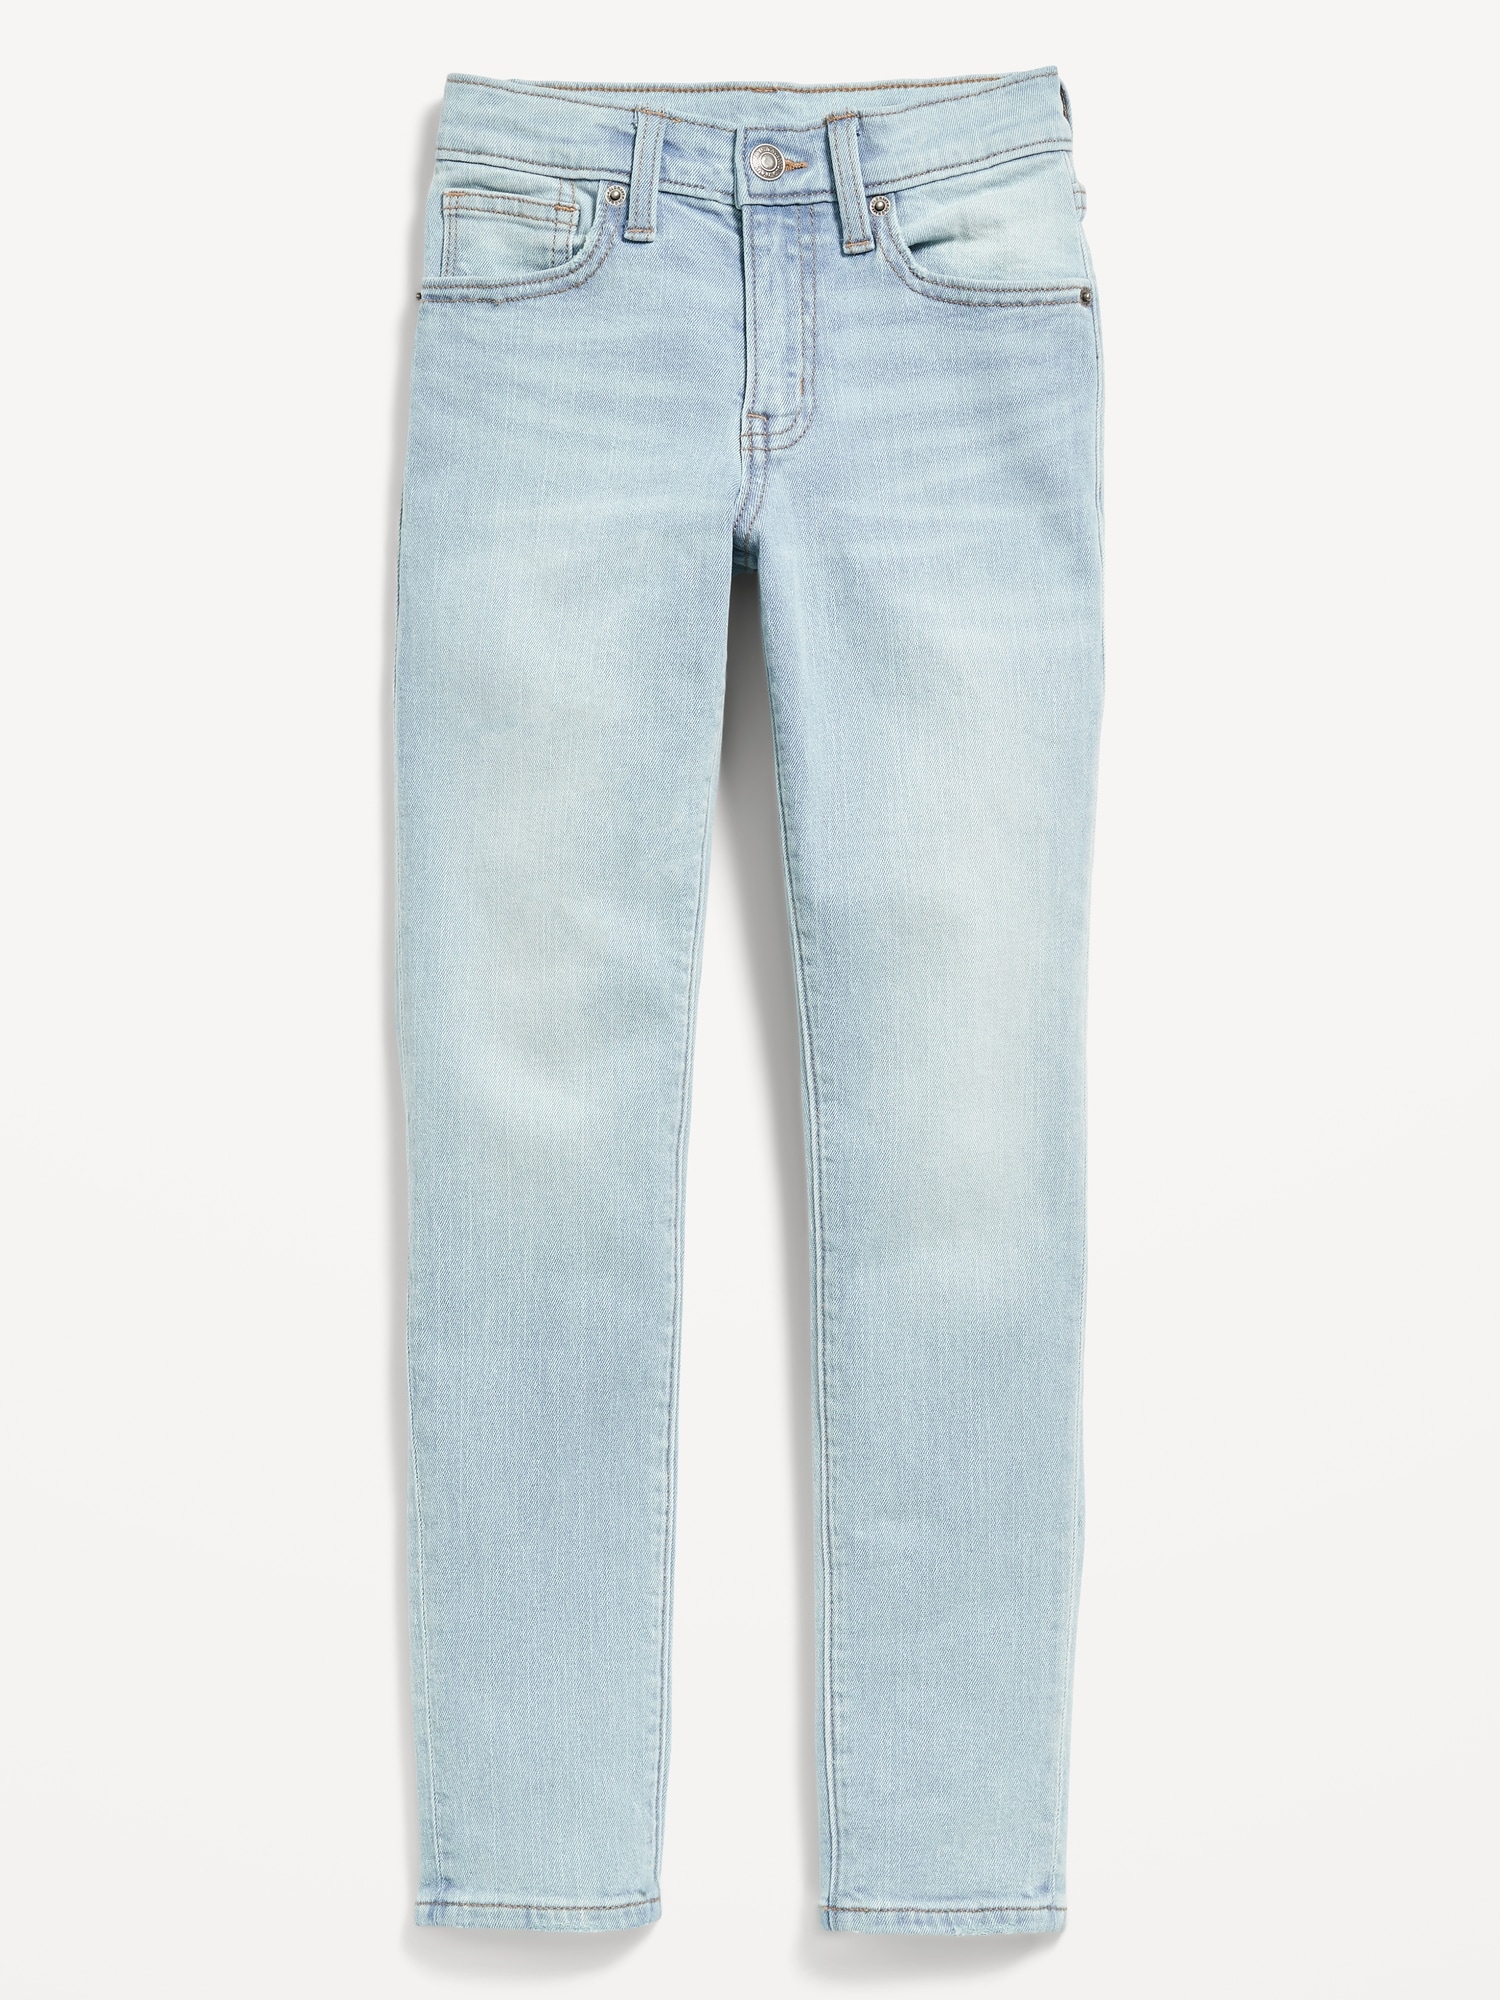 Original Taper Jeans for Boys Hot Deal